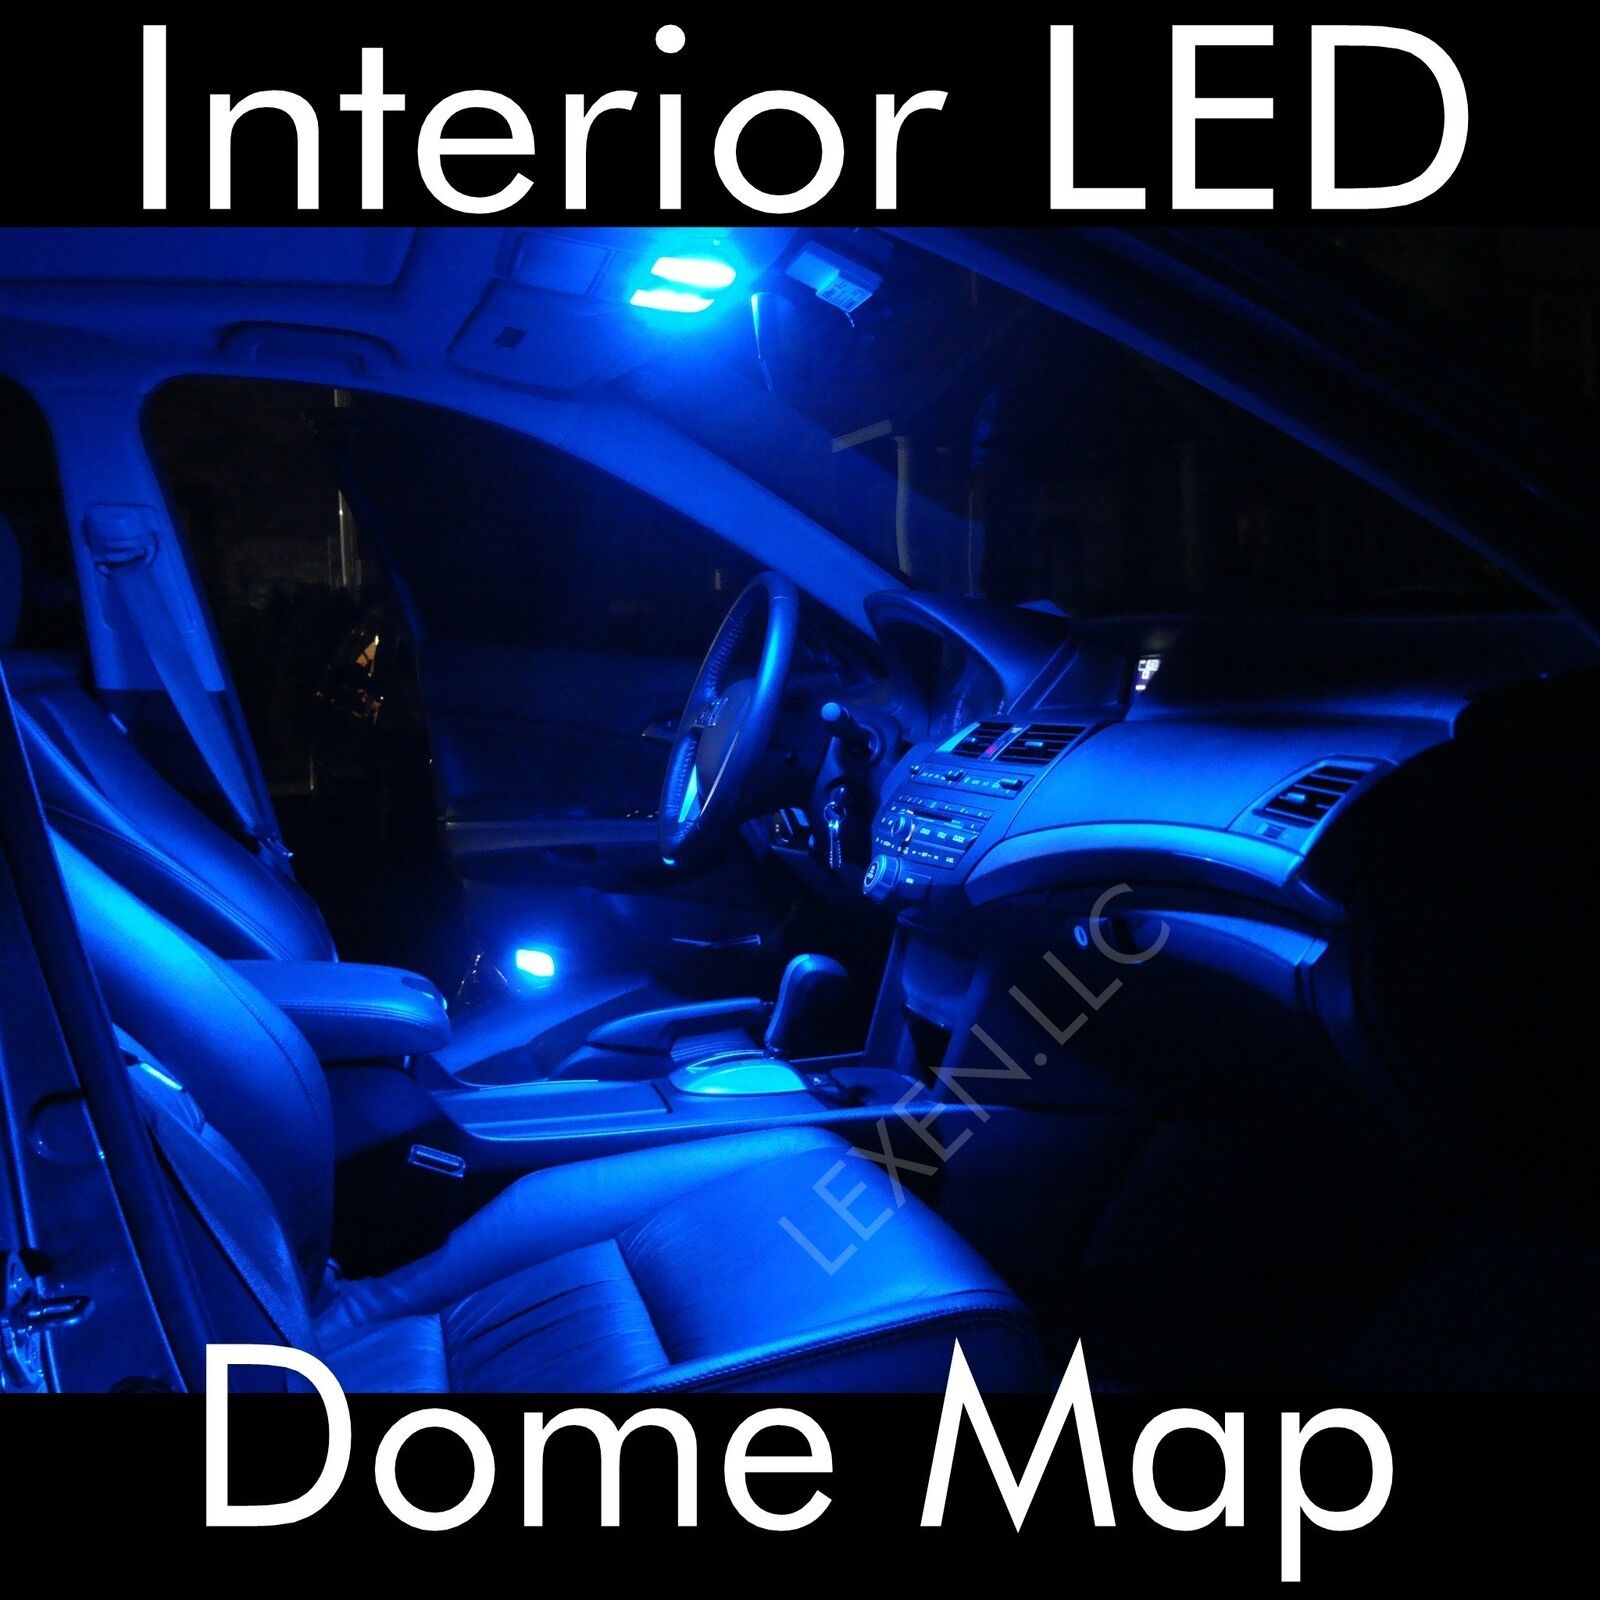 LED B9 BLUE 2X DOME MAP INTERIOR LIGHT BULB 9 SMD CIRCLE PANEL XENON HID LAMP a